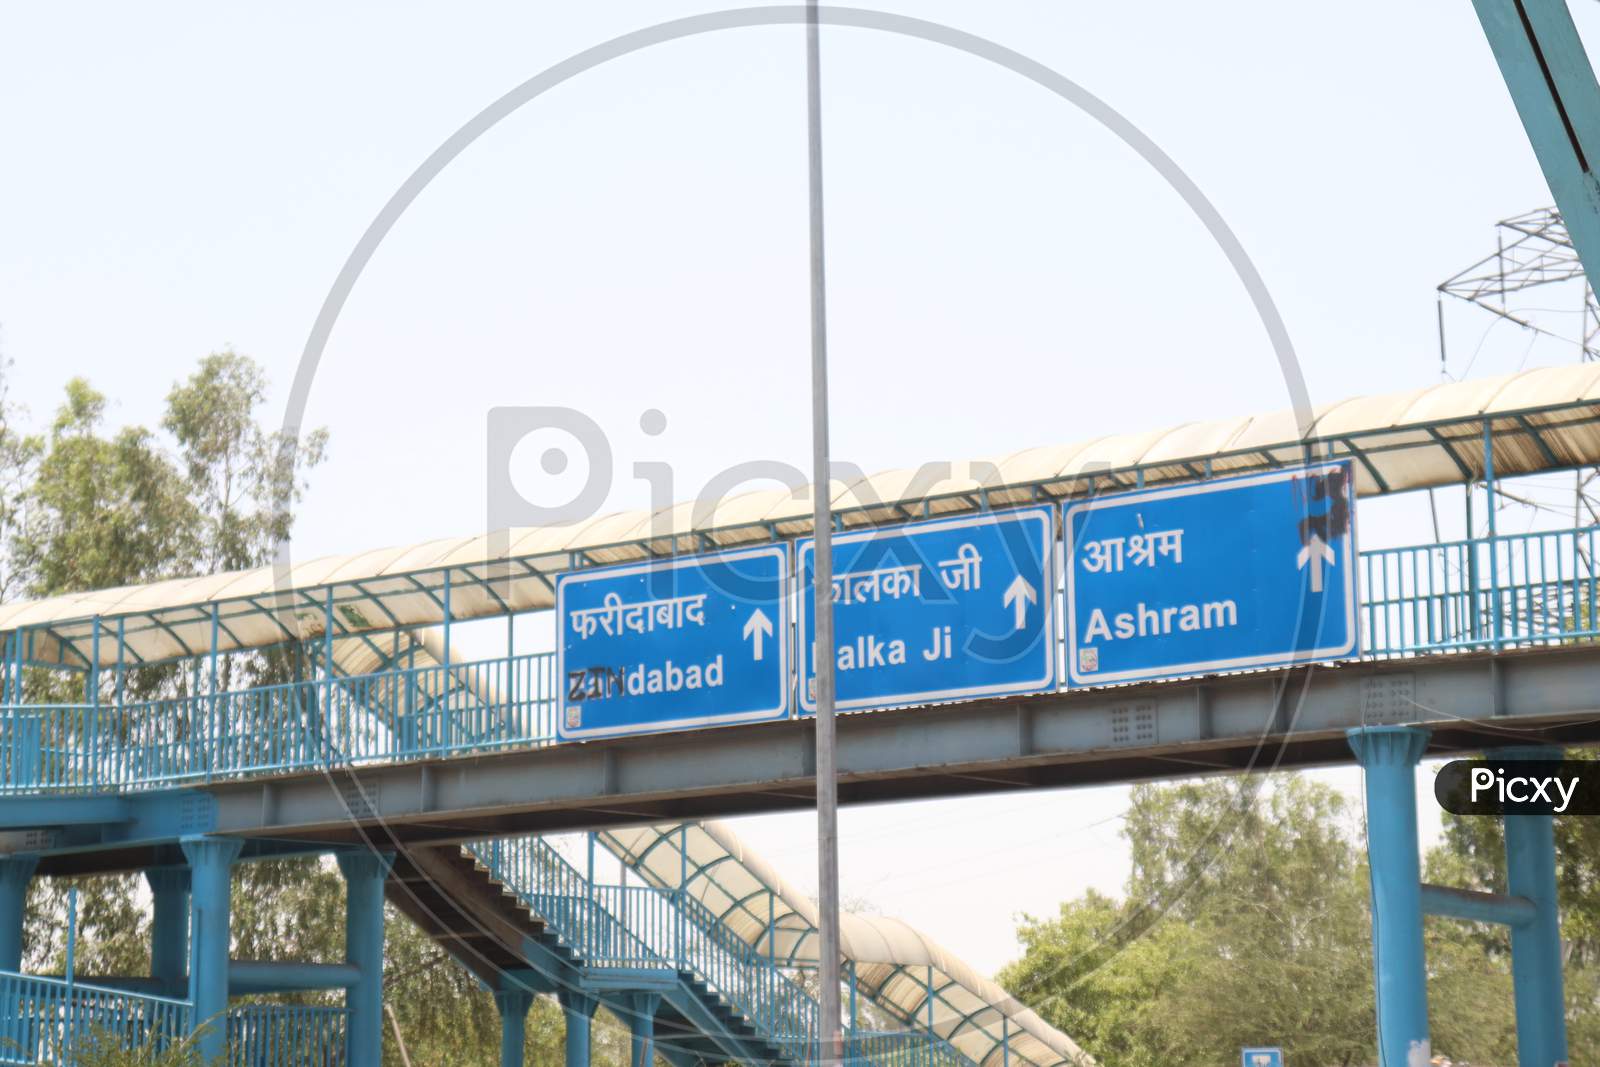 "New Delhi -27.05.2020:  Road Signs In Blue On The Streets  In Fardabad , Kalki Ji And Ashram  Of New Delhi "